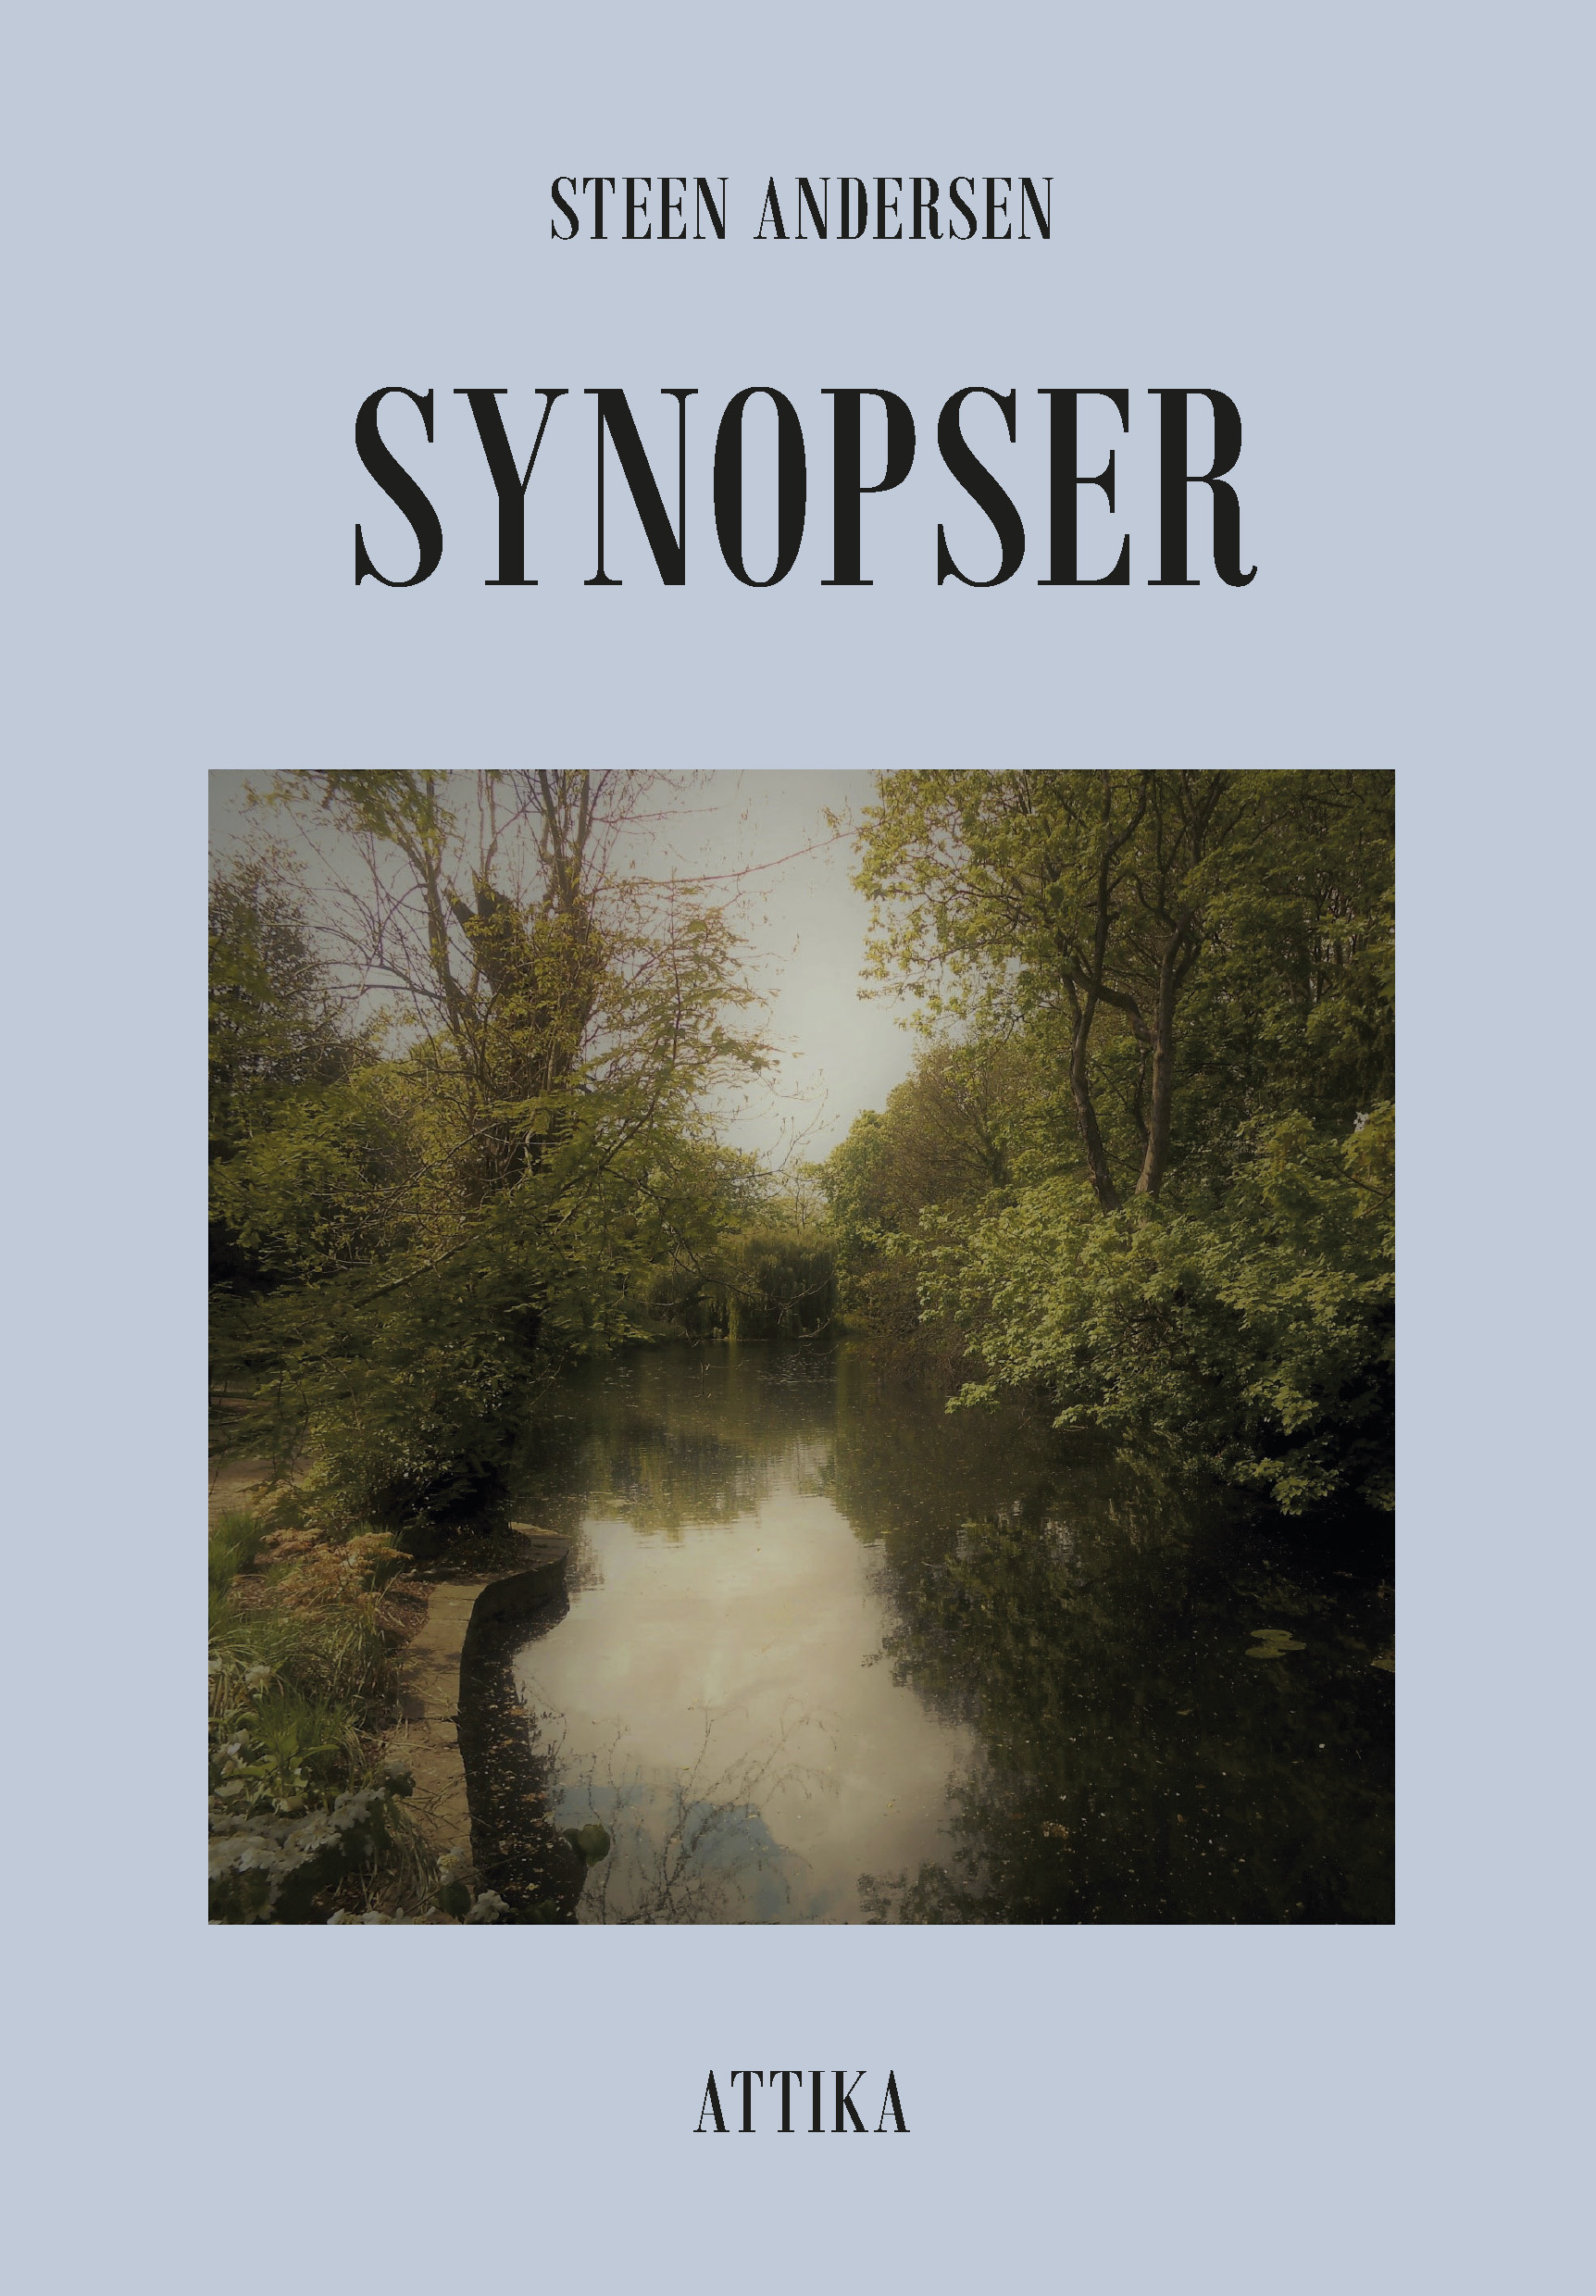 Steen Andersen: Synopser